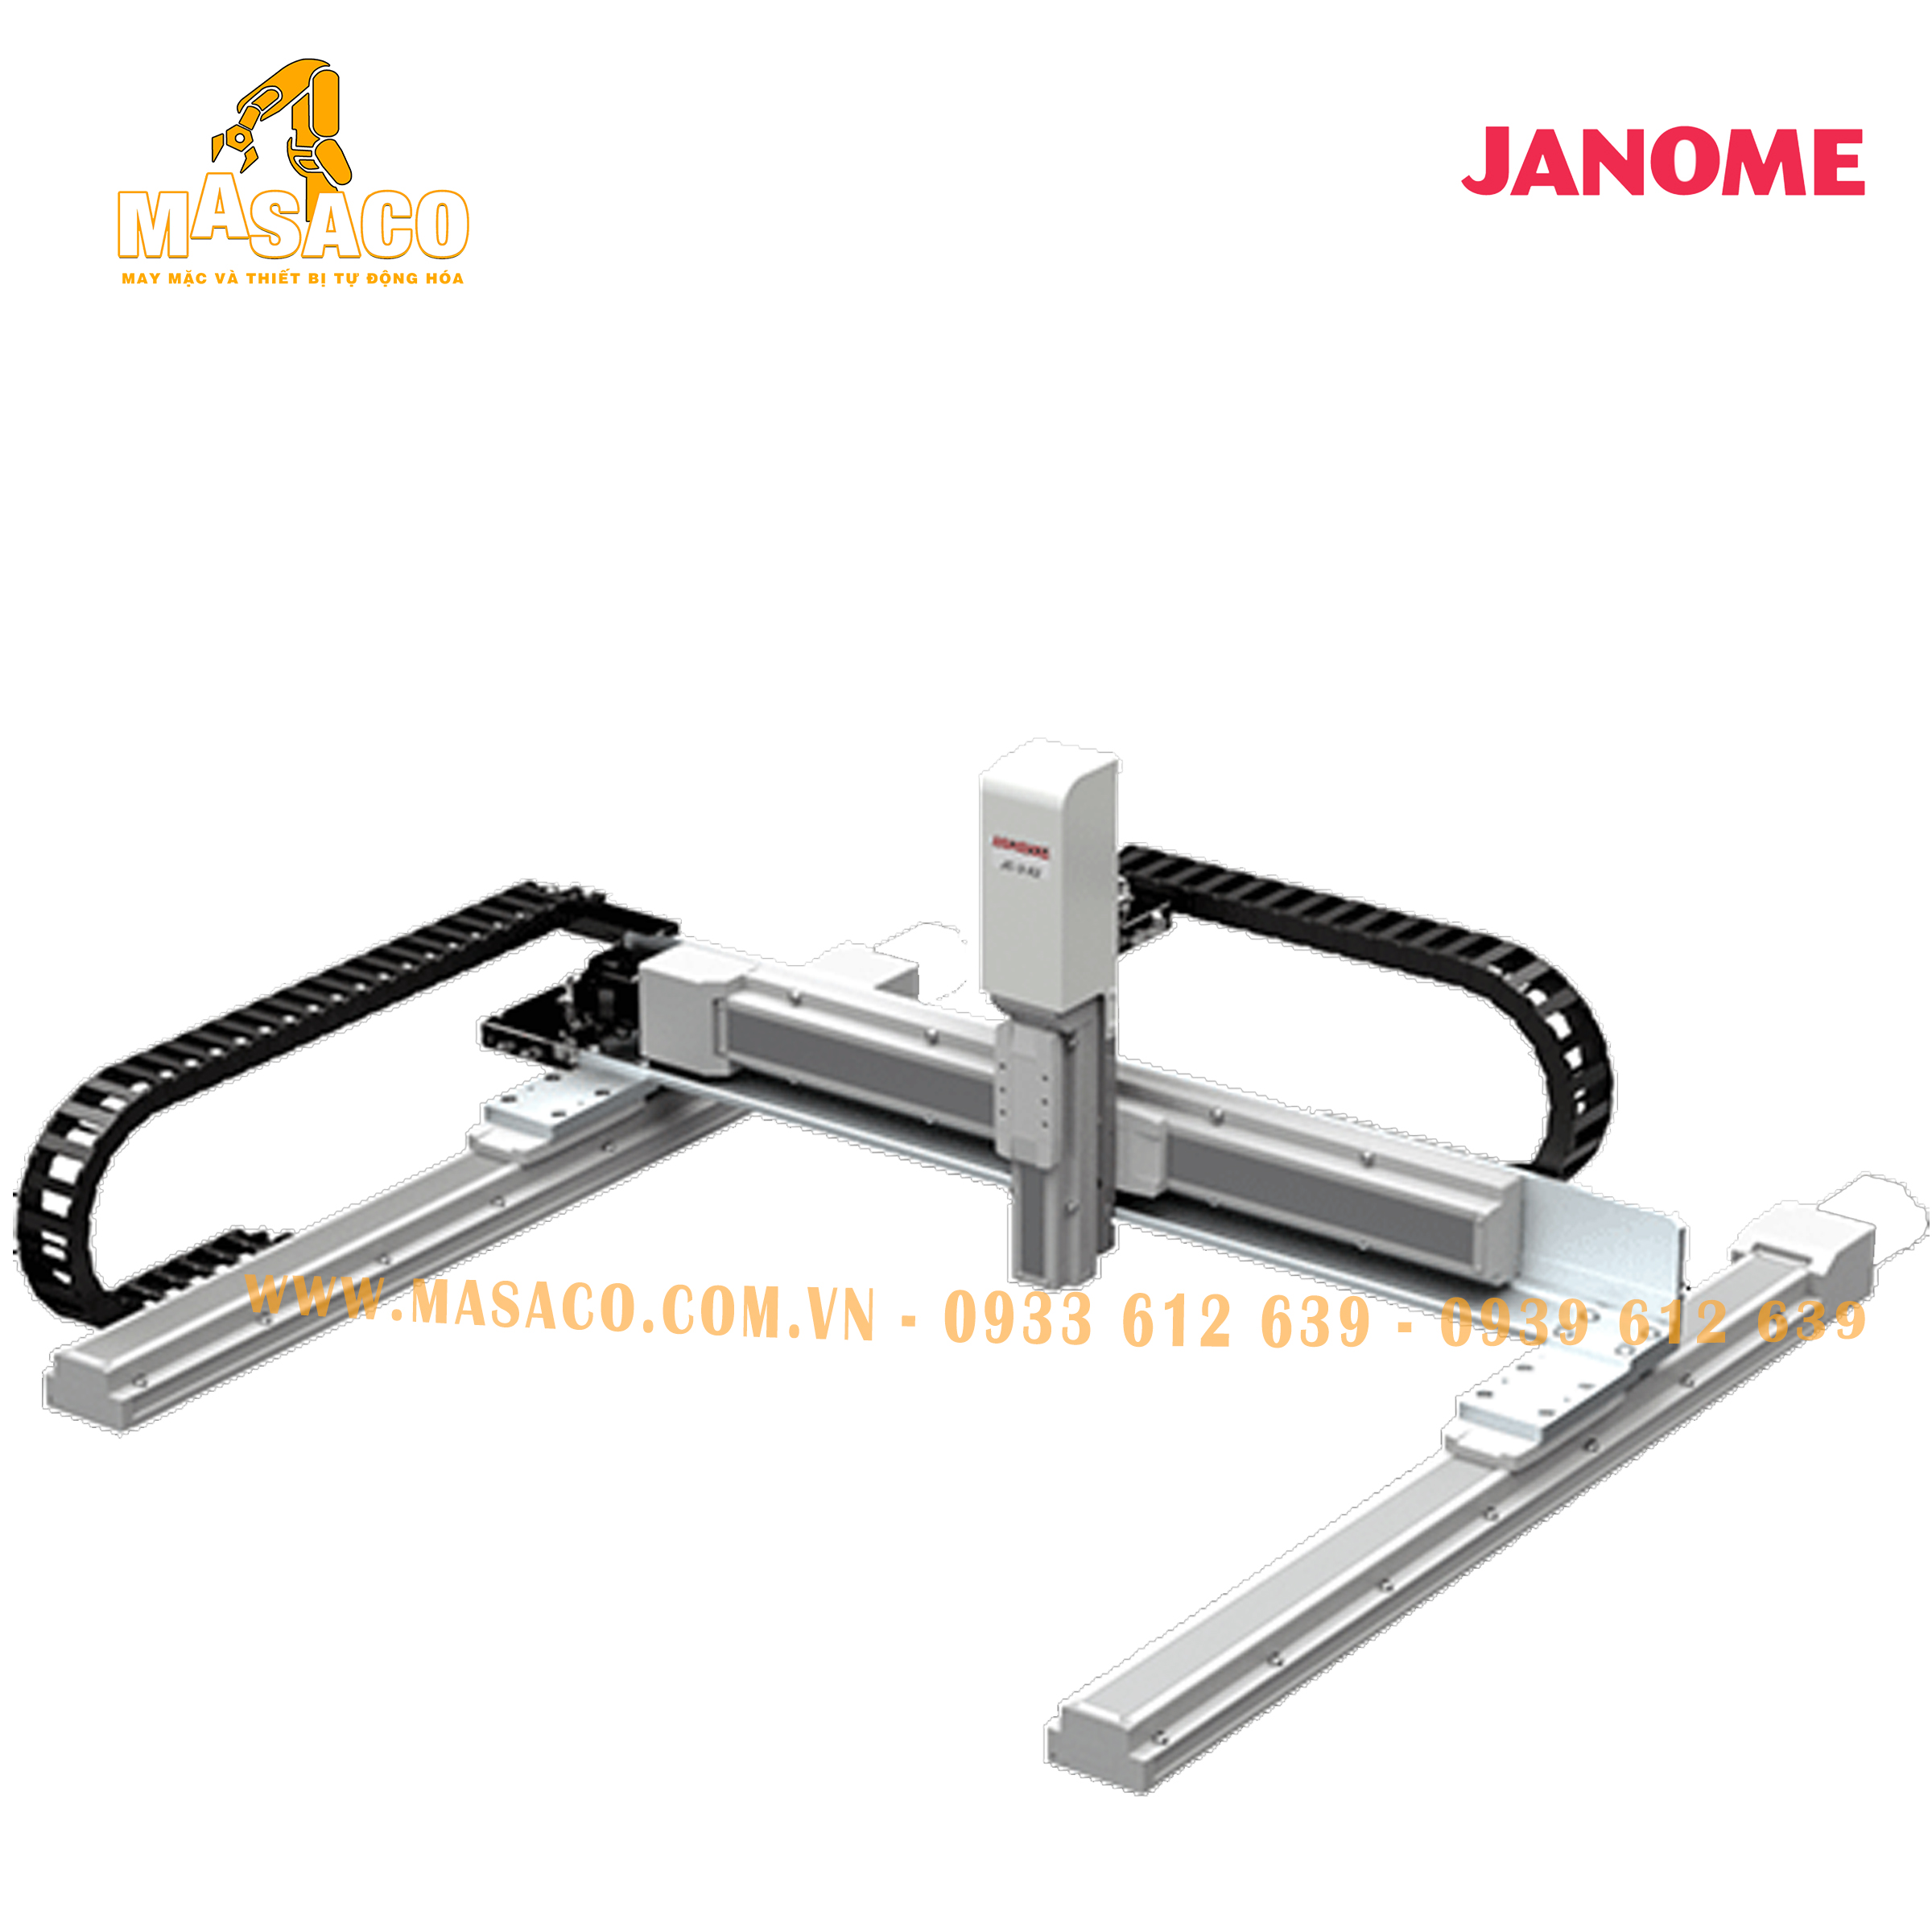 janome-cartesian-robot-jc-3-series-long-stroke-model